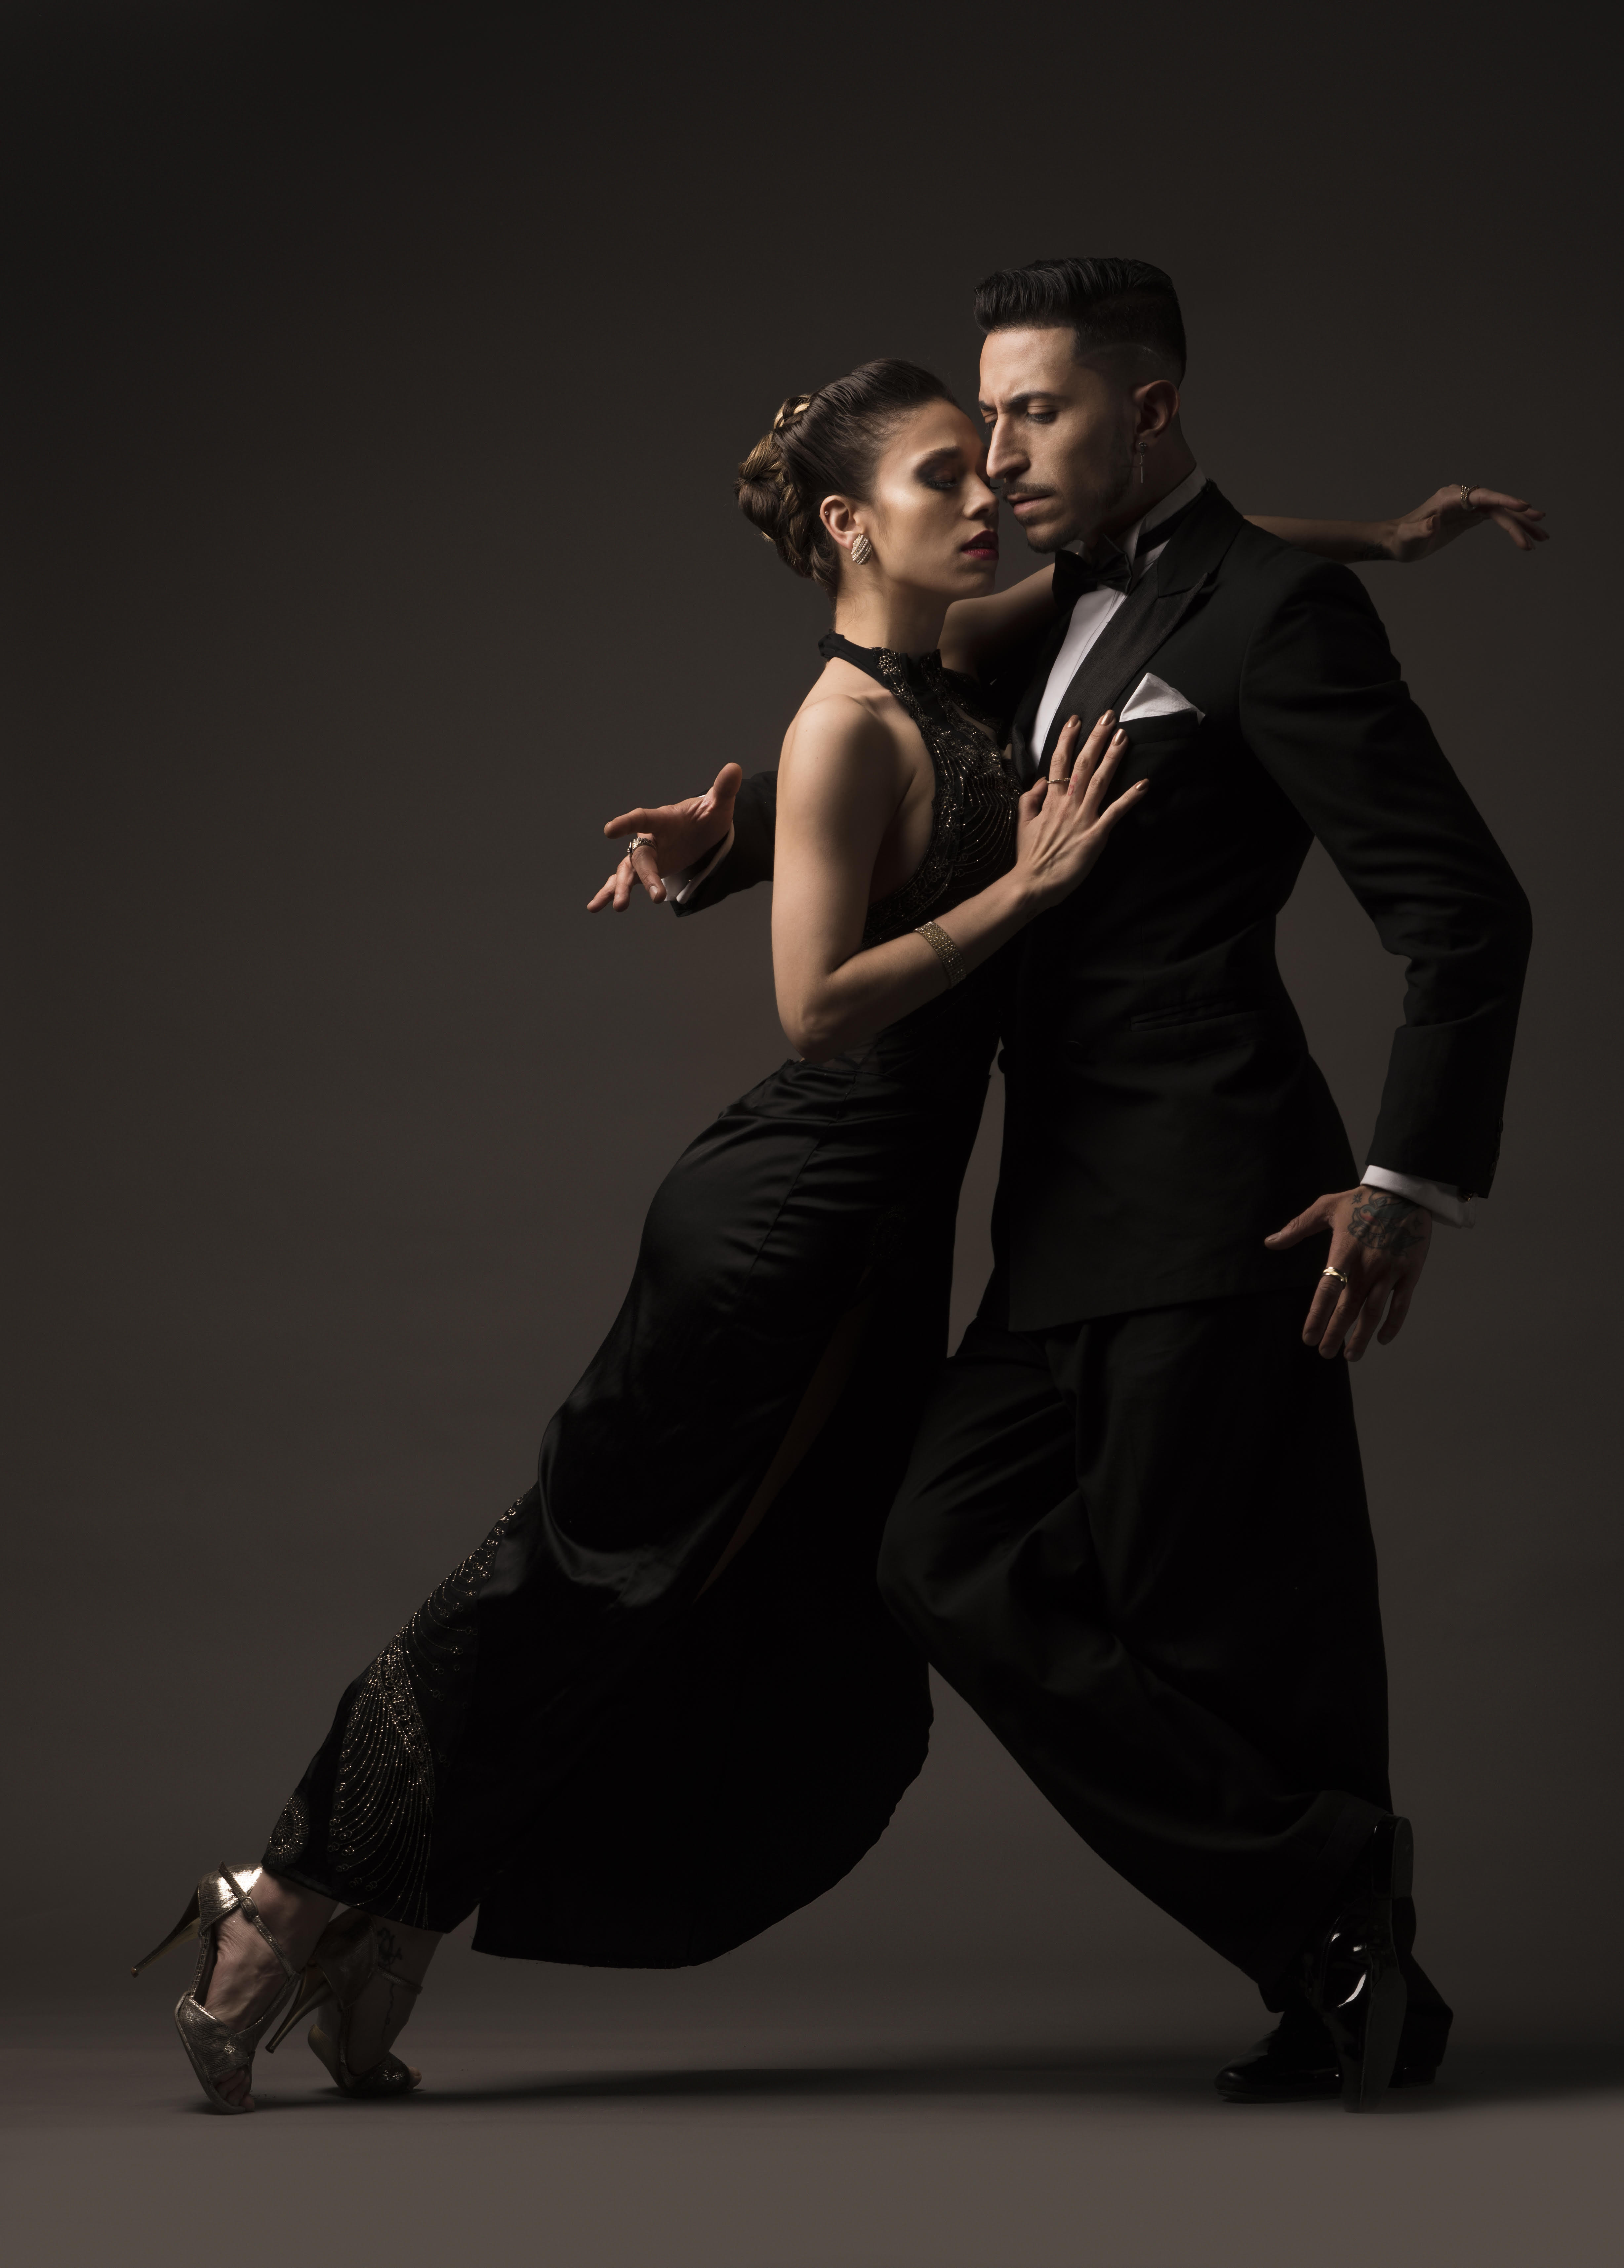 Julián Sanchez & Bruna Estillita. Leader technic/ follower technic: Our way to dance and live Tango